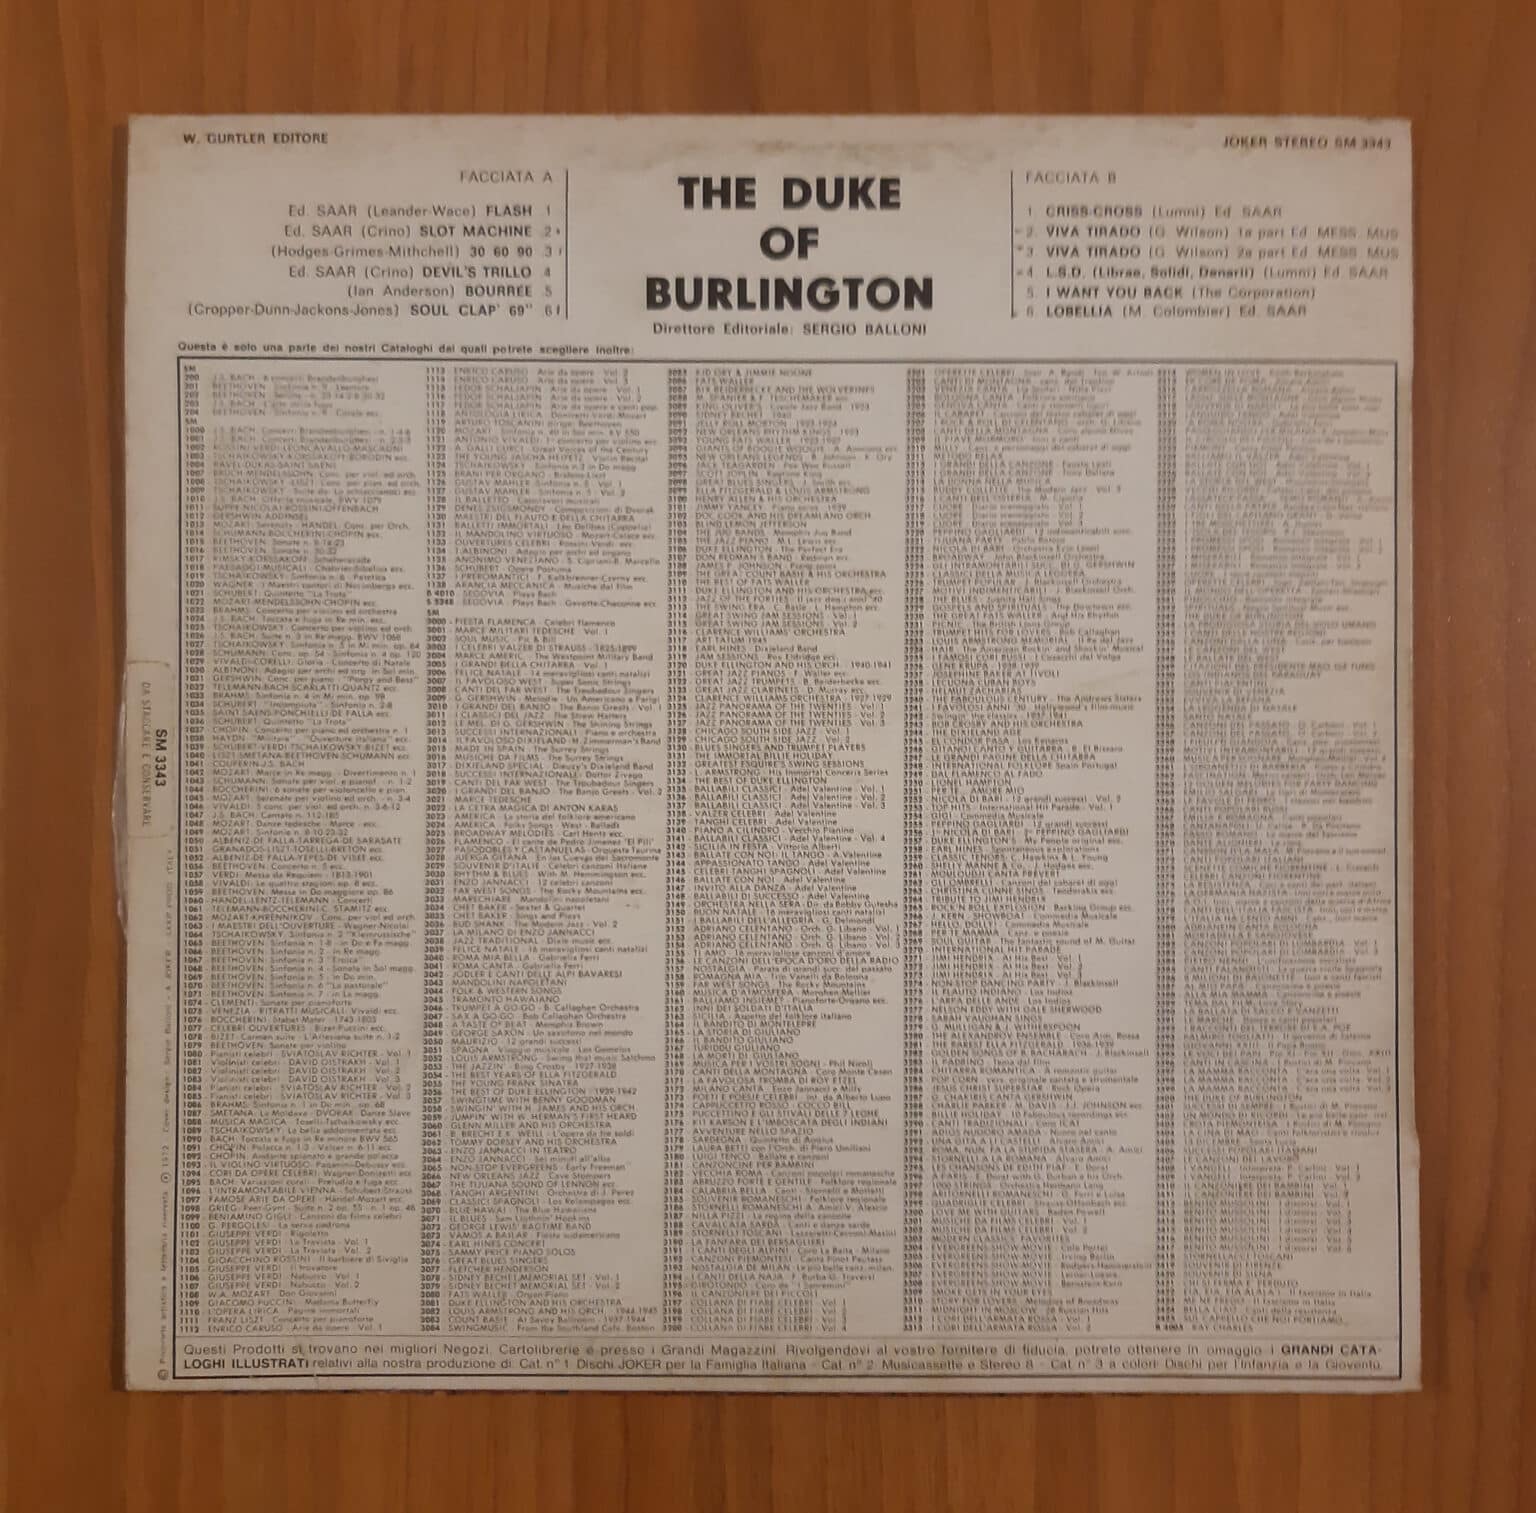 The Duke of Burlington: The Pressed Piano Hi-Fi e Vinili